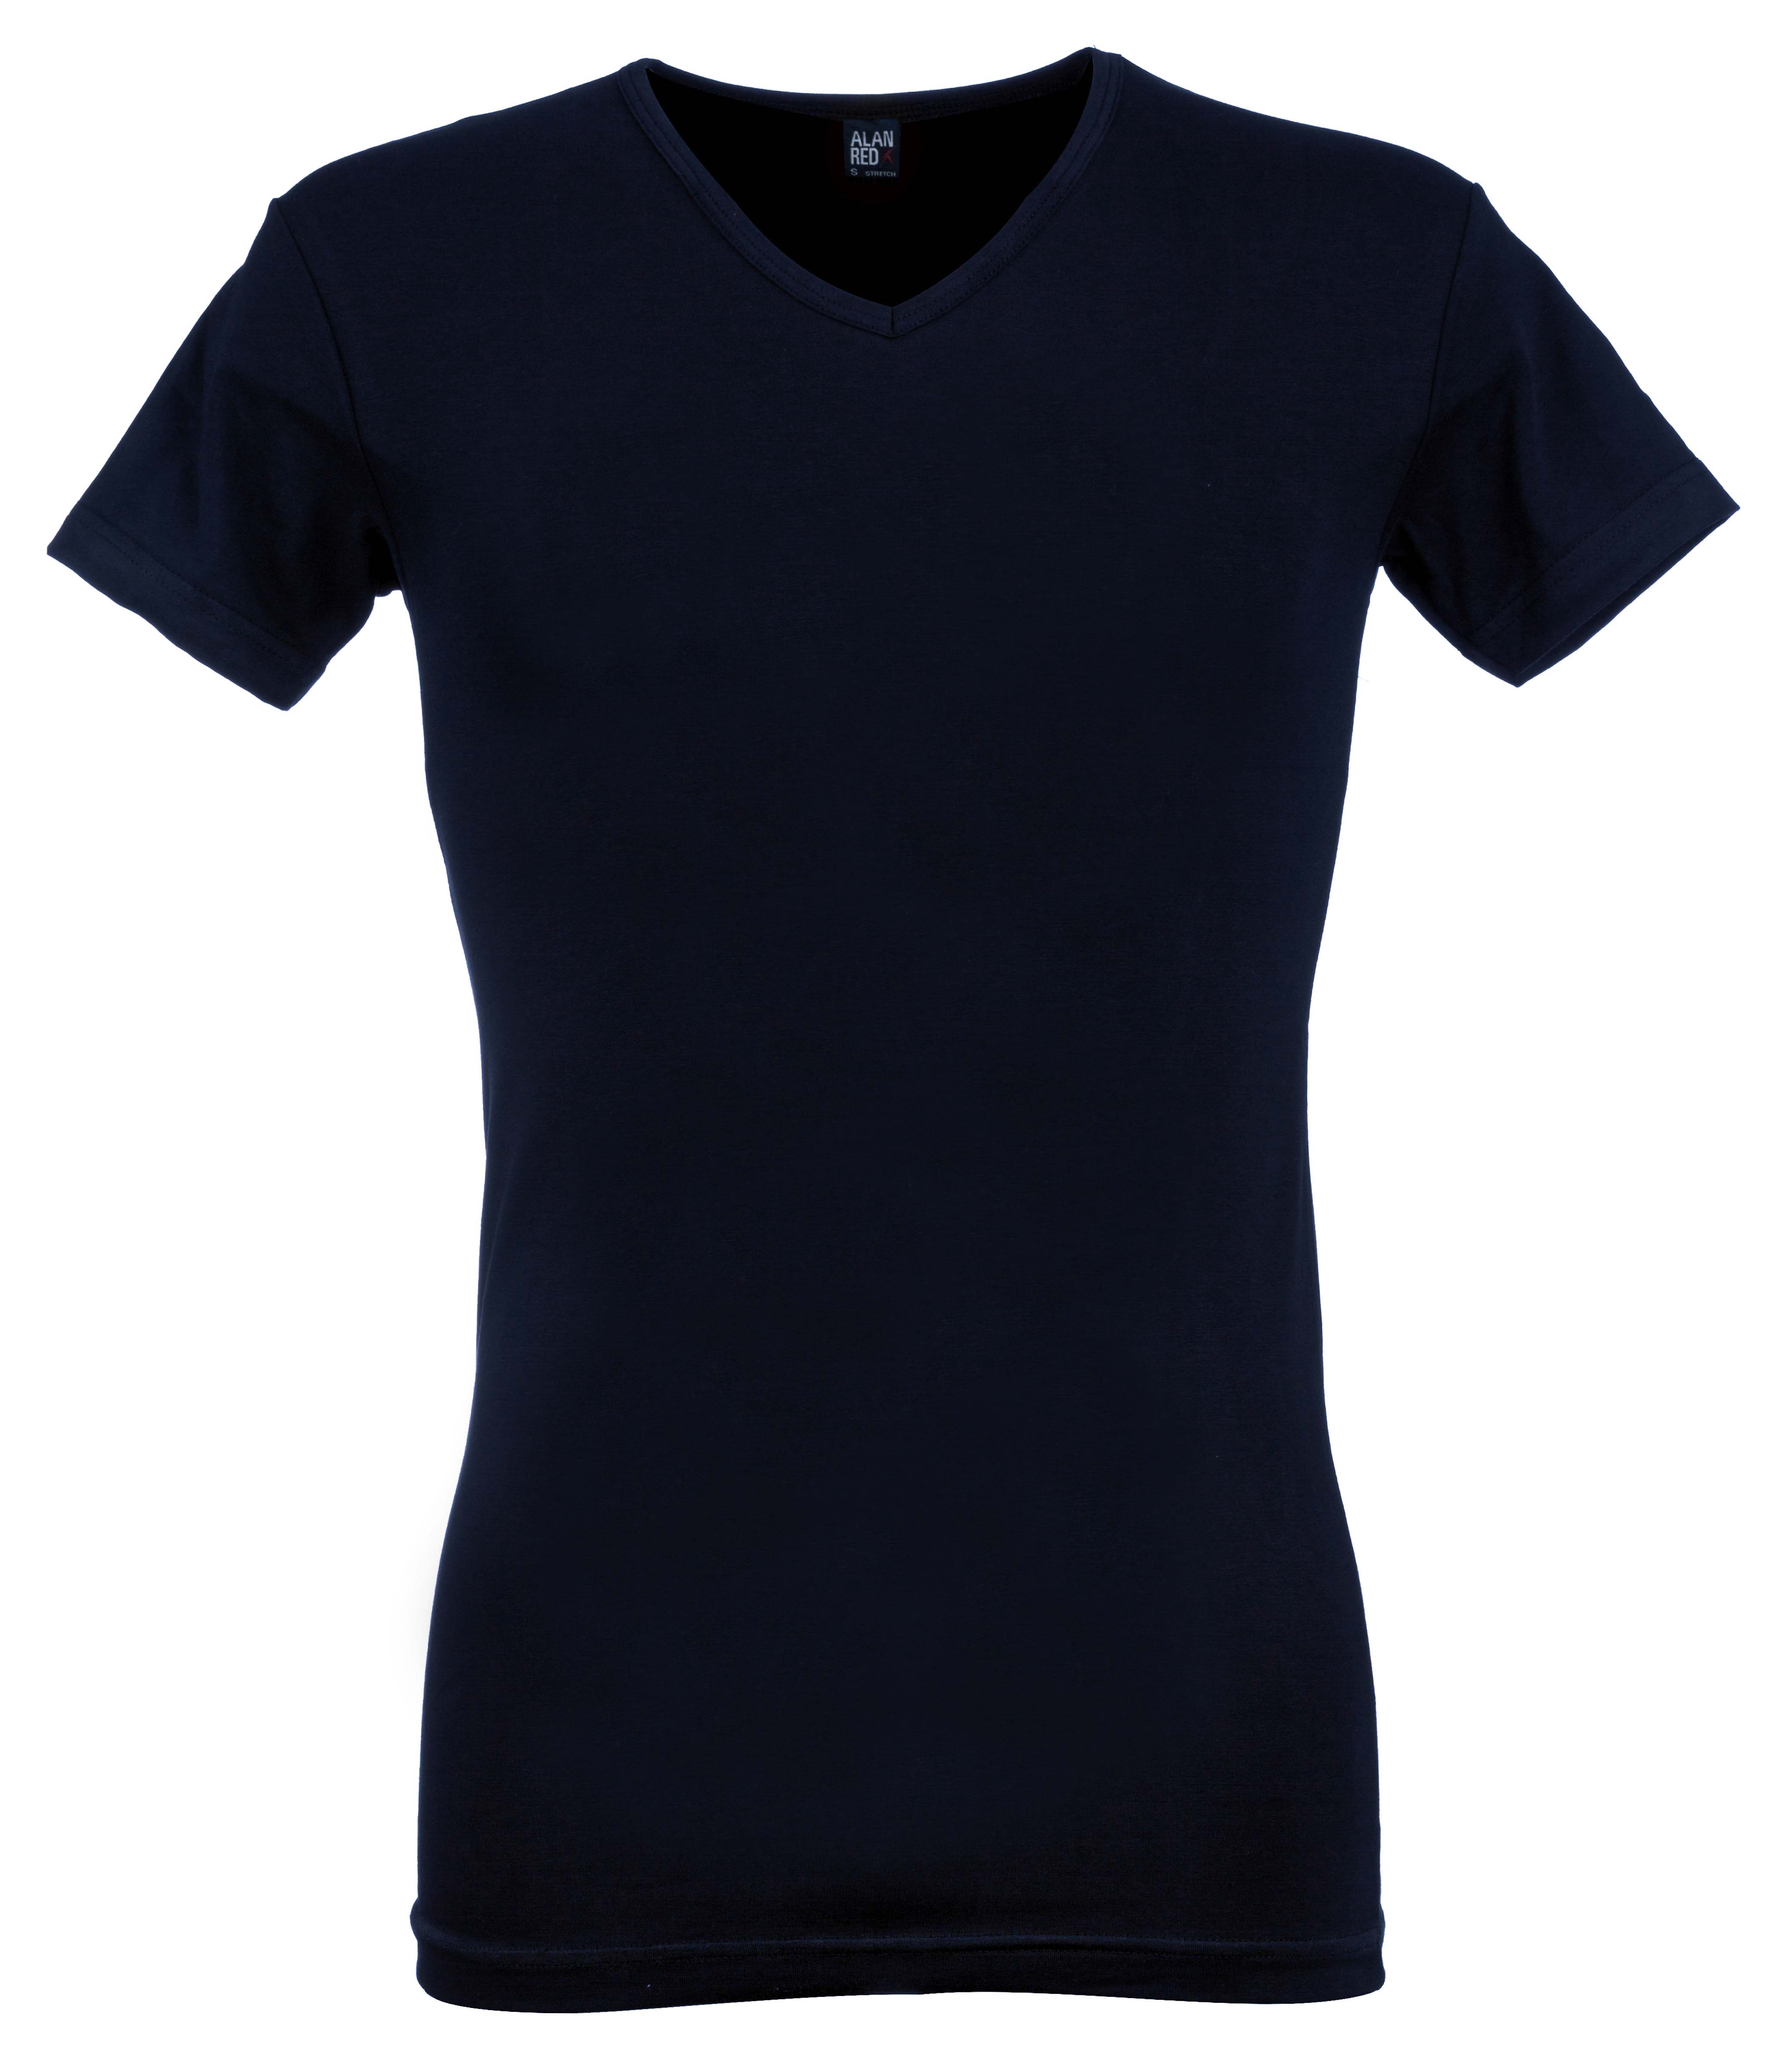 Alan Oklahoma 2-Pack T-Shirt Black | Jan Rozing Men's Fashion